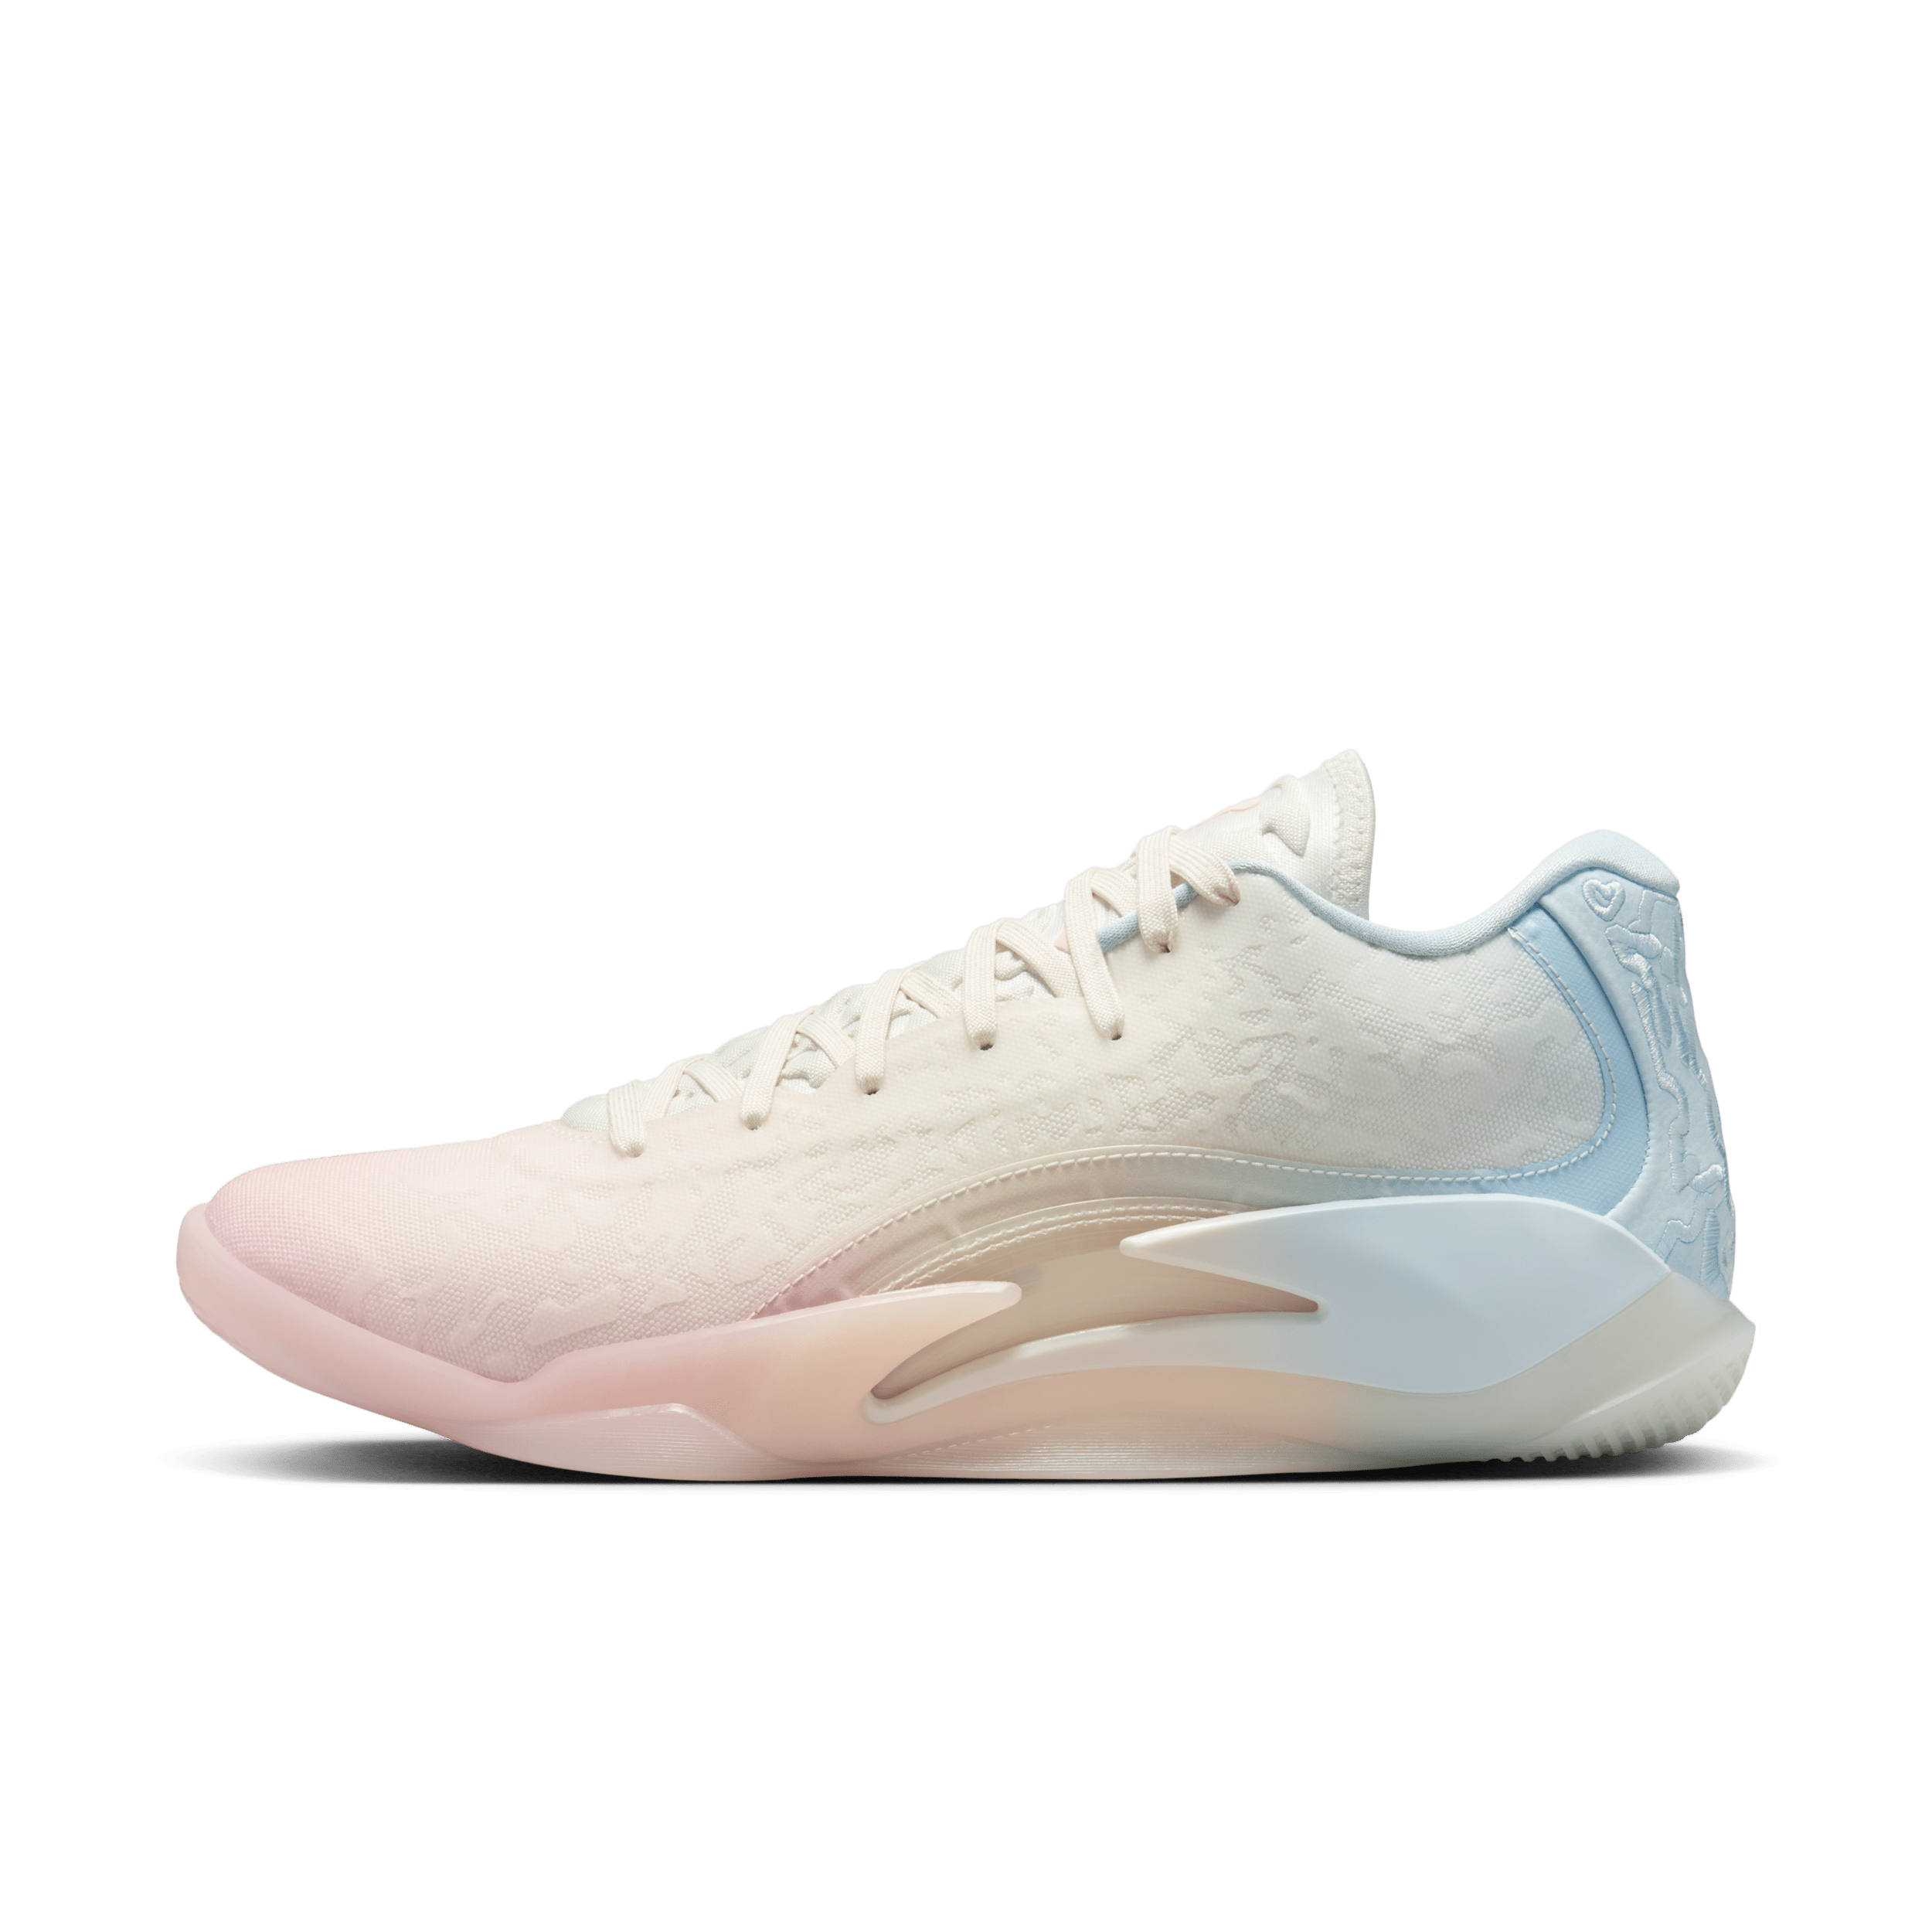 Nike Zion 3 'Rising' basketbalschoenen - Roze